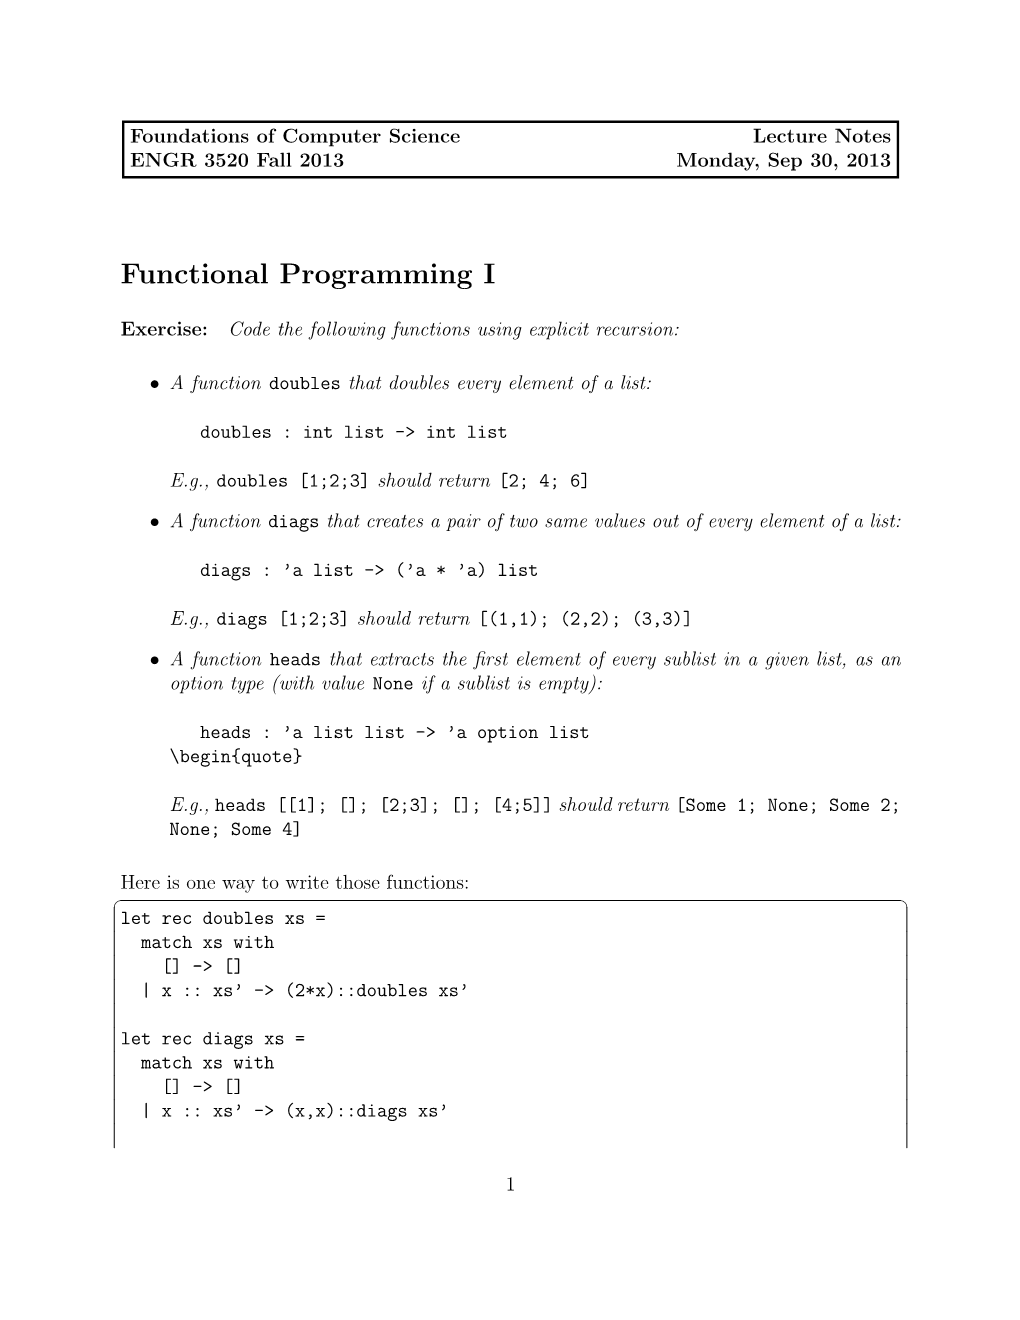 Functional Programming I